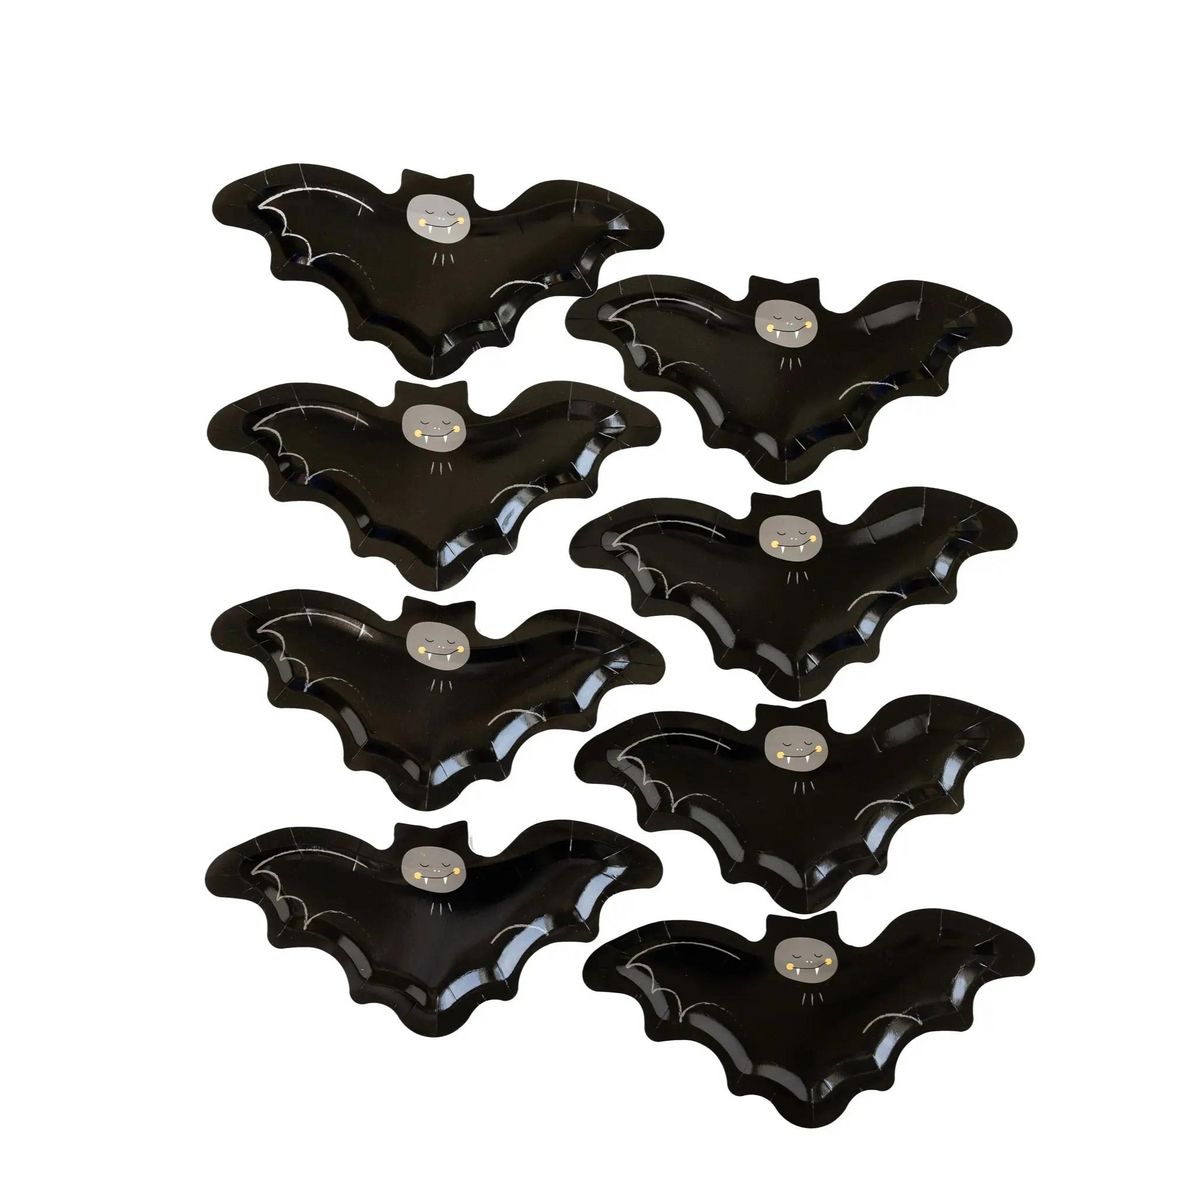 Bat Shaped Plates